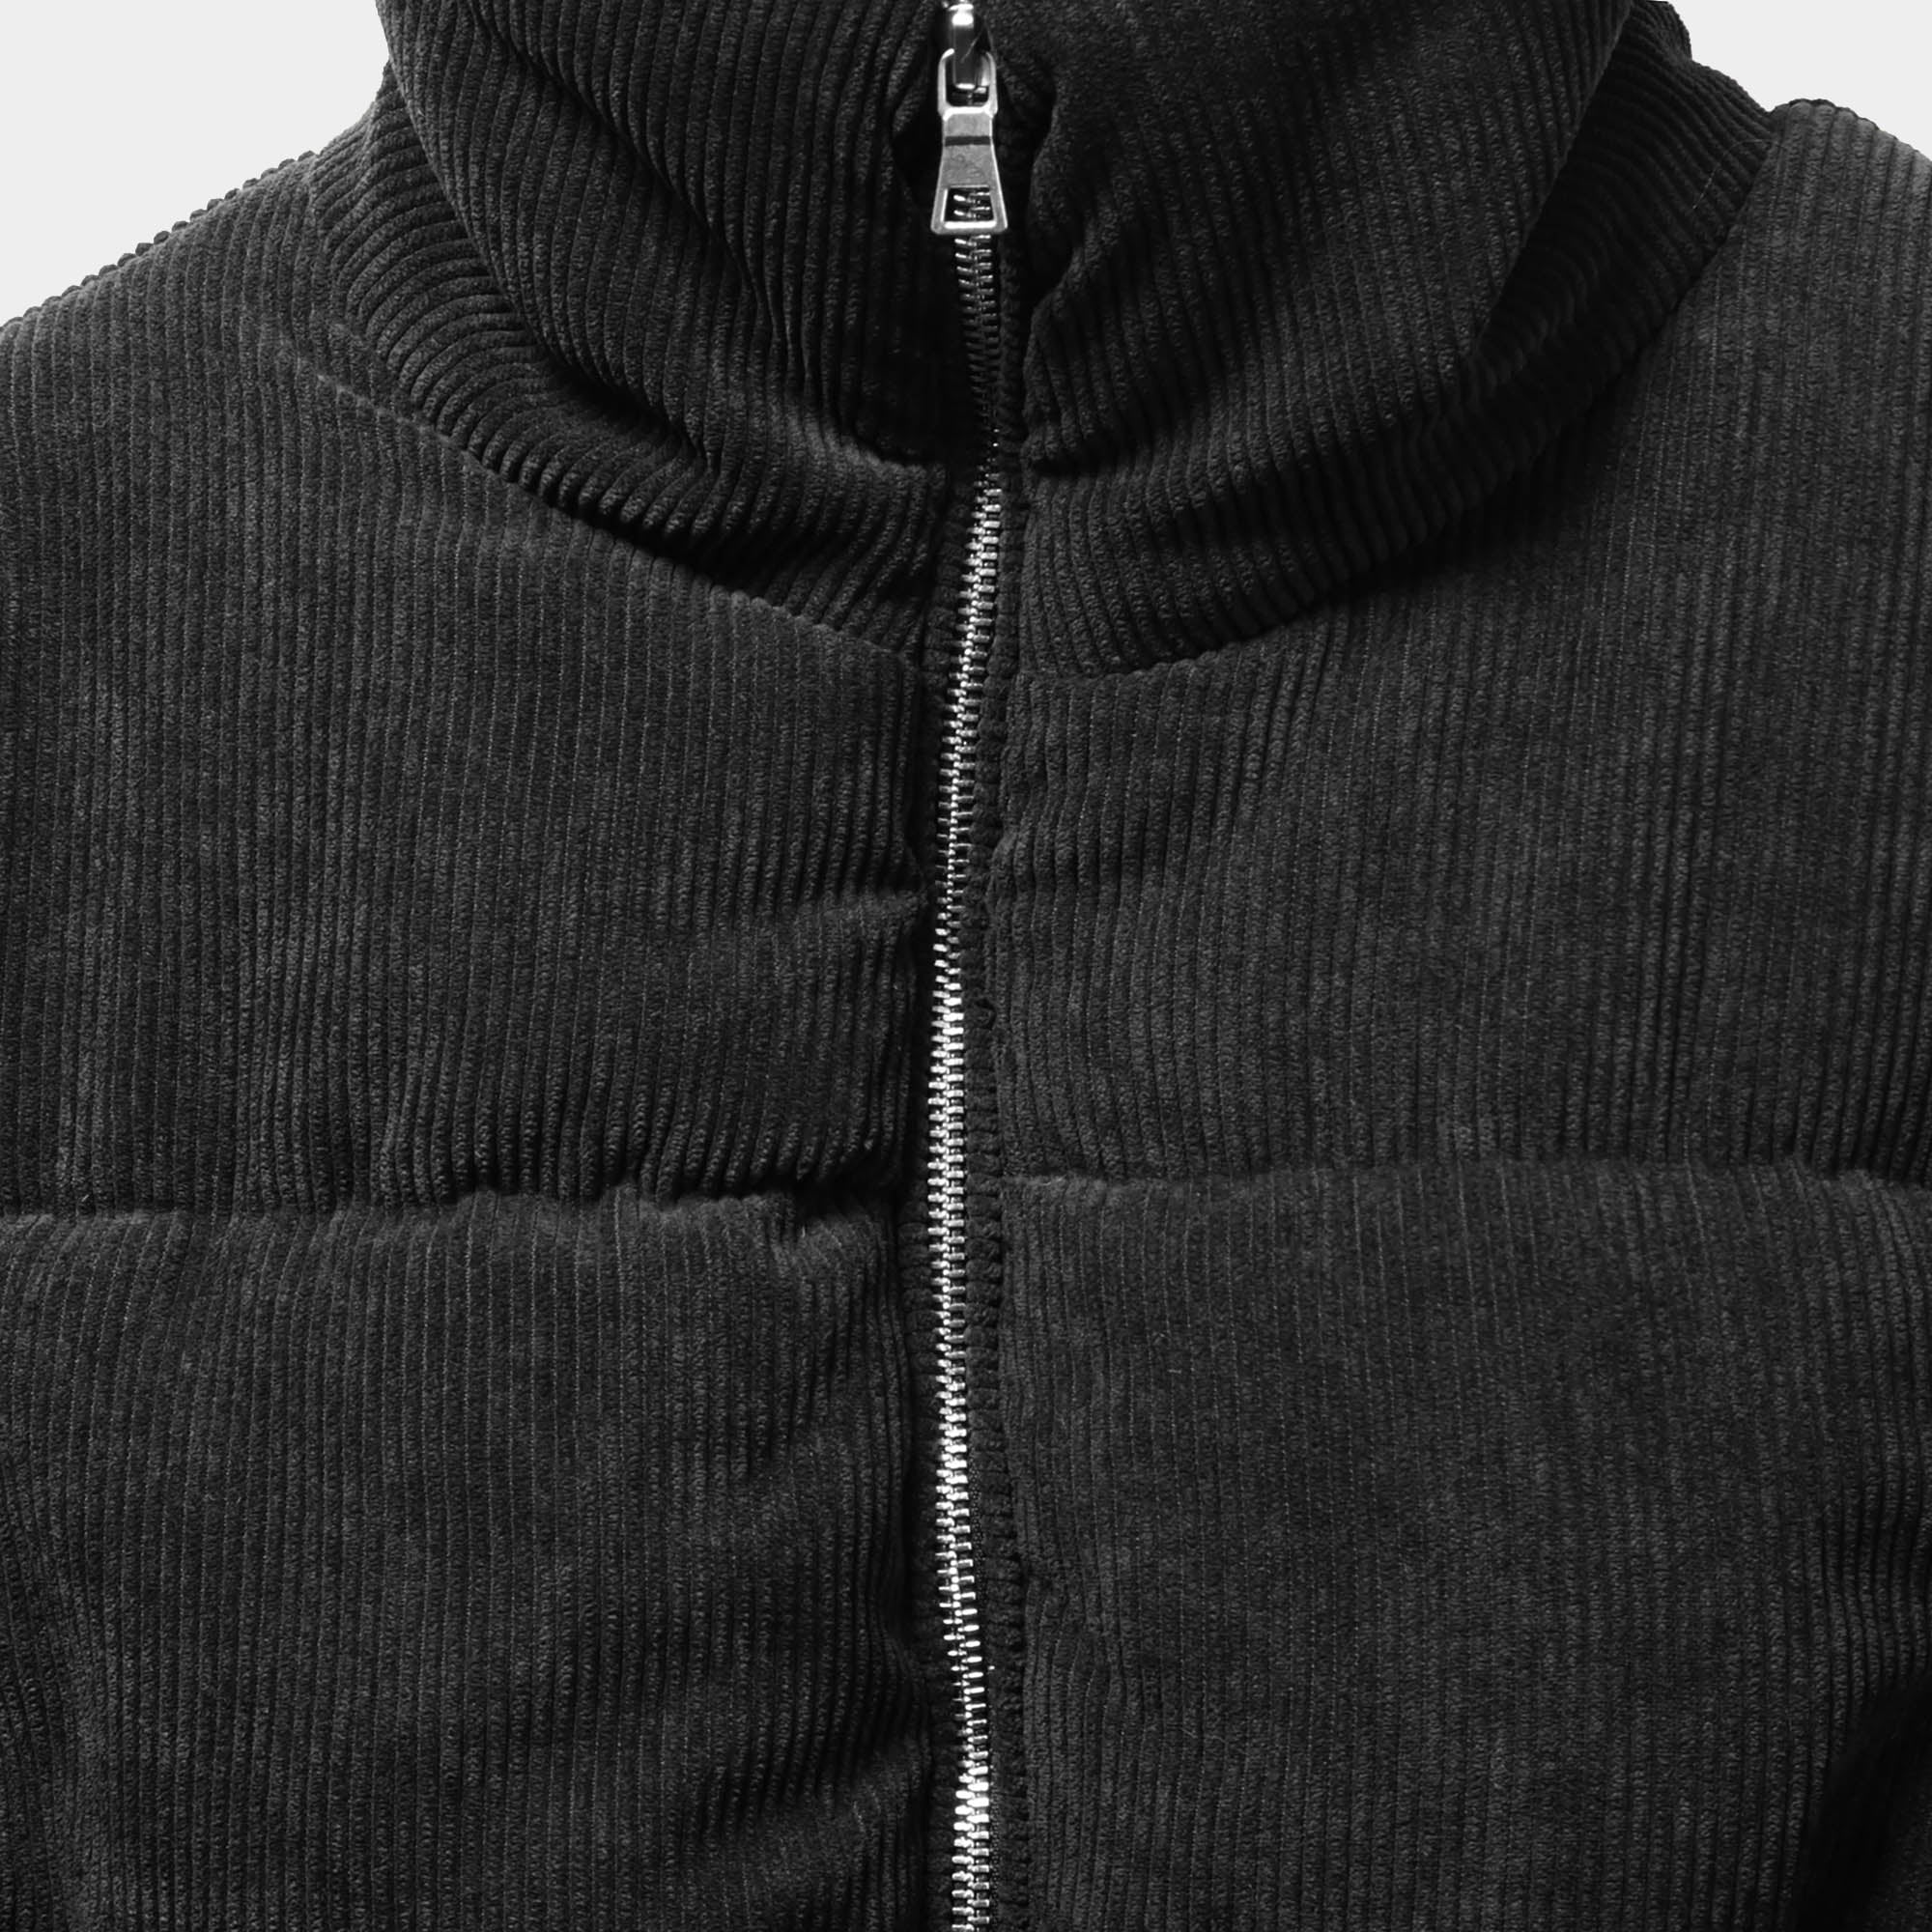 corduroy puffer jacket_cord puffer jacket_corduroy puffer_corduroy puffer coat_corduroy jacket puffer_cord jacket_oversized corduroy jacket_Black